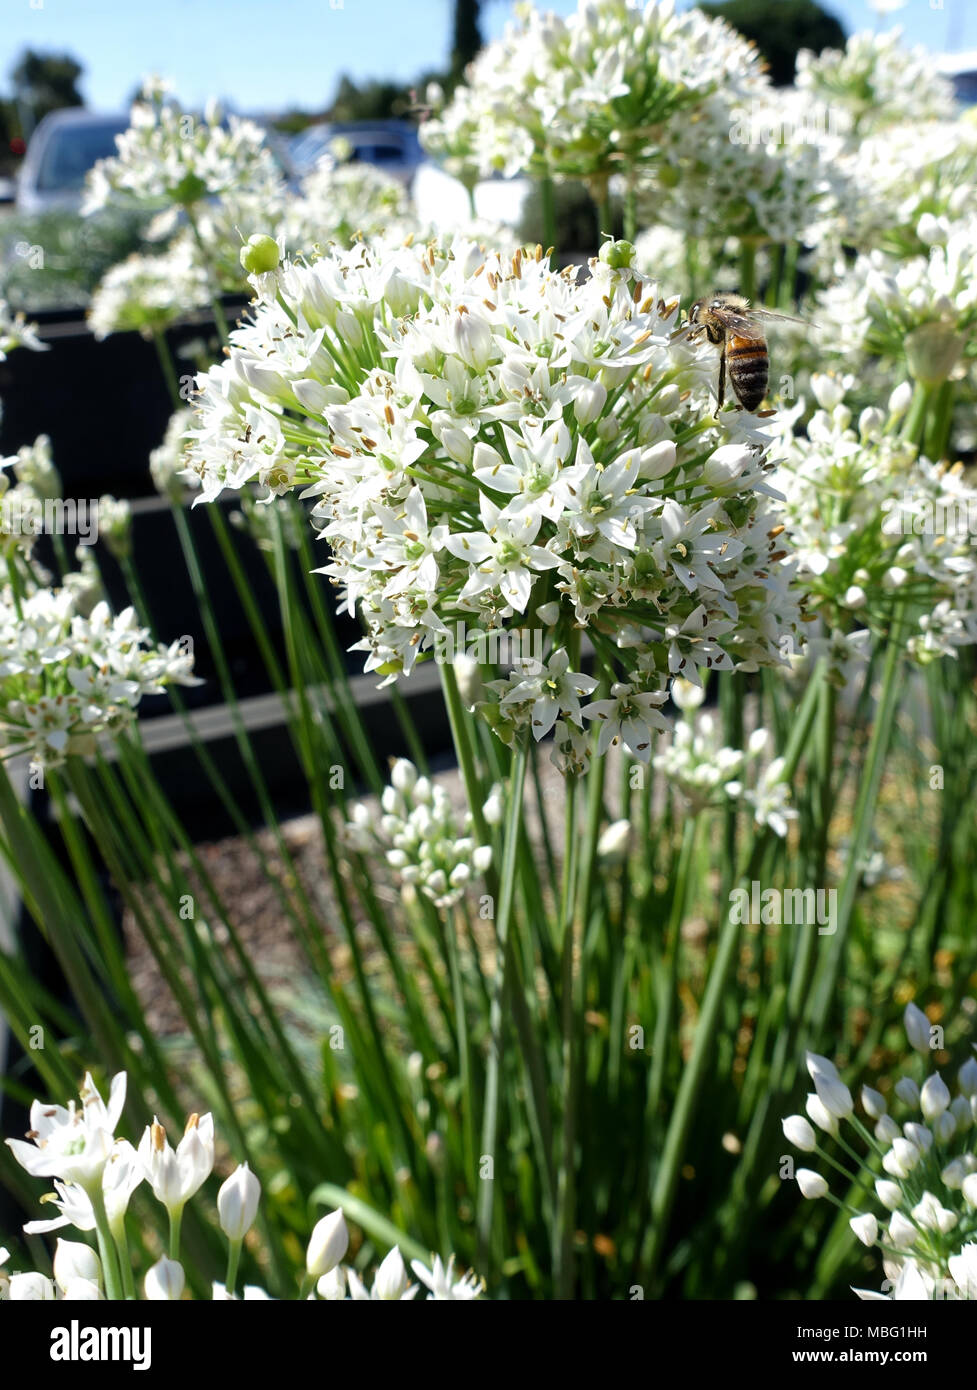 Close up della fioritura aglio erba cipollina - Allium tuberosum Foto Stock